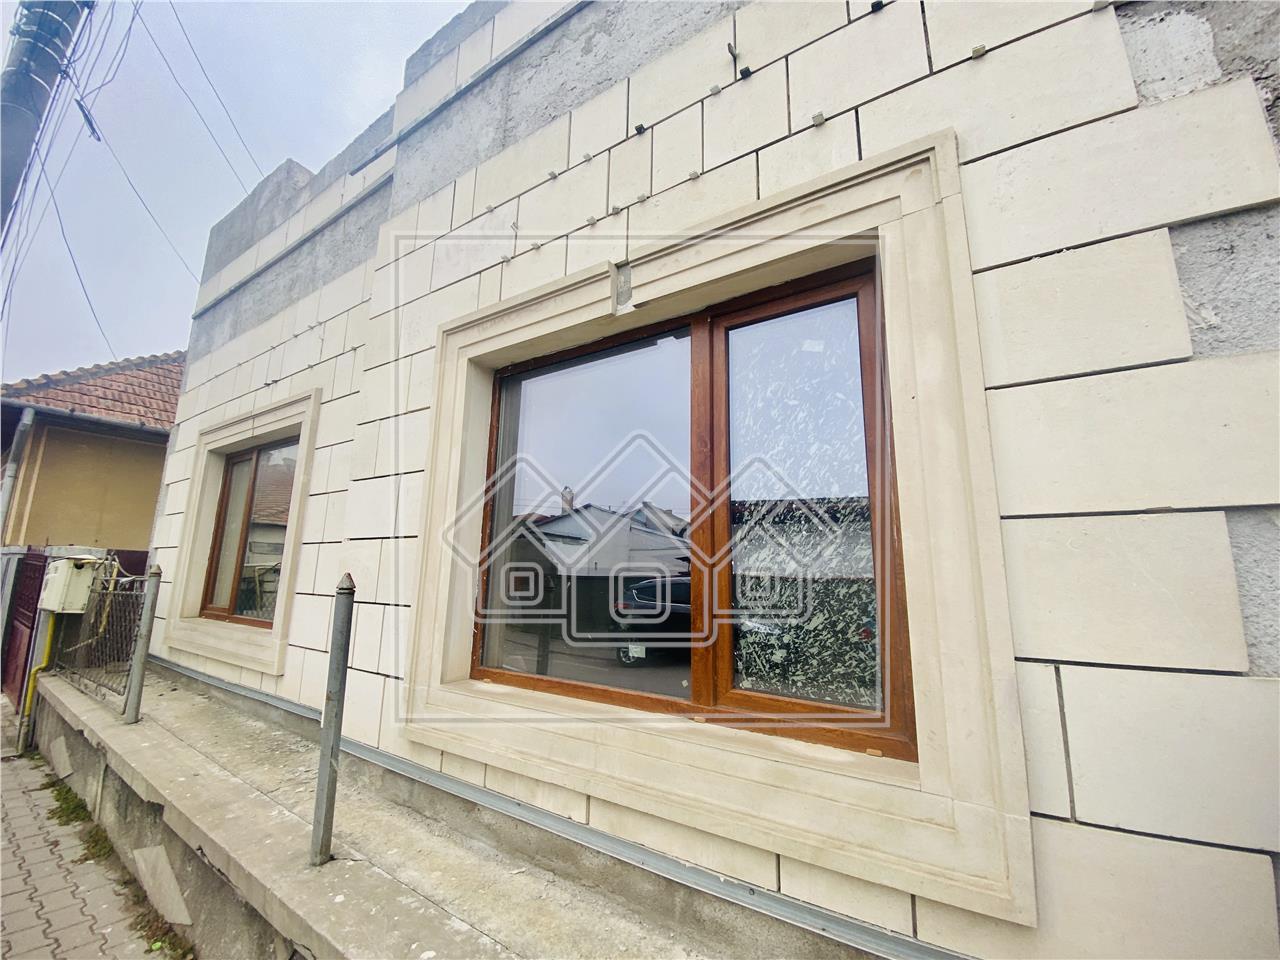 House for sale in Alba Iulia - individual - gray delivery - Mall area